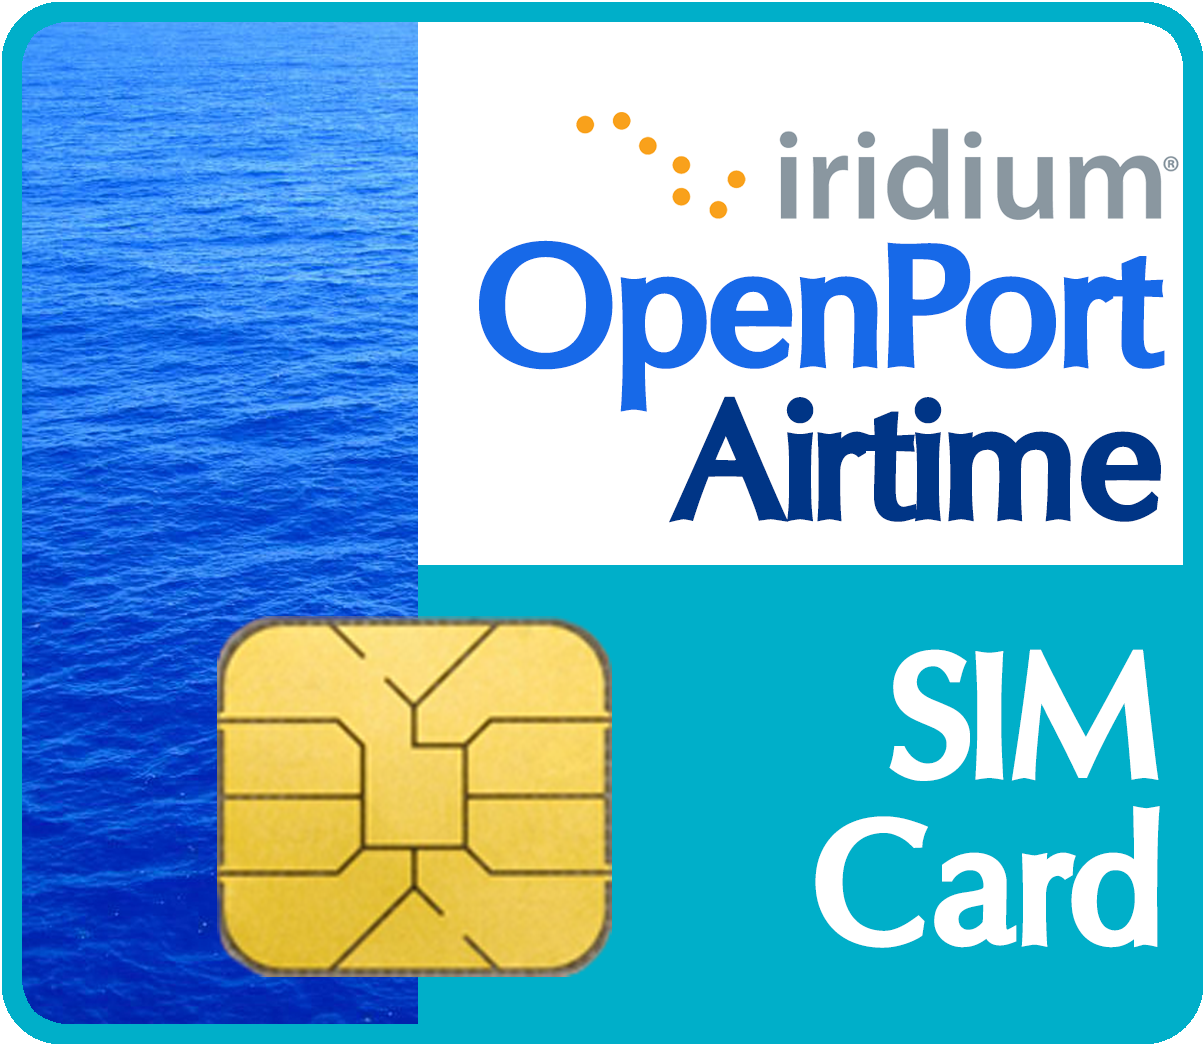 Iridium Open Port Airtime S I M Card PNG